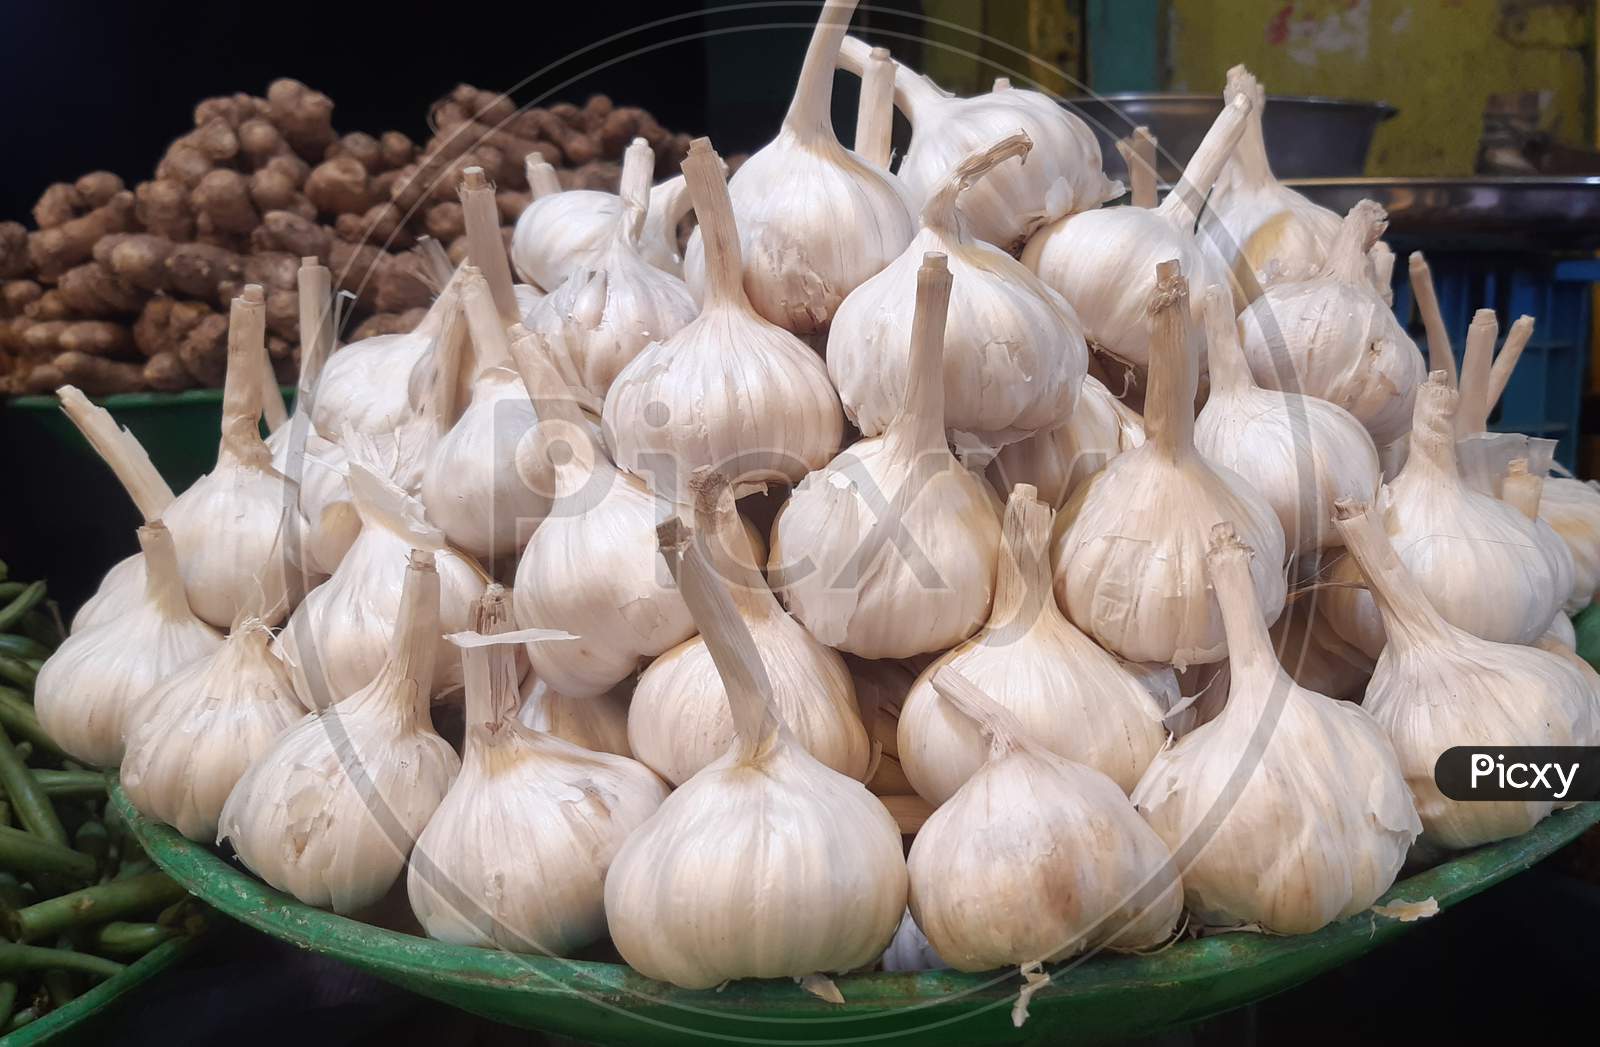 Garlics in a green tray